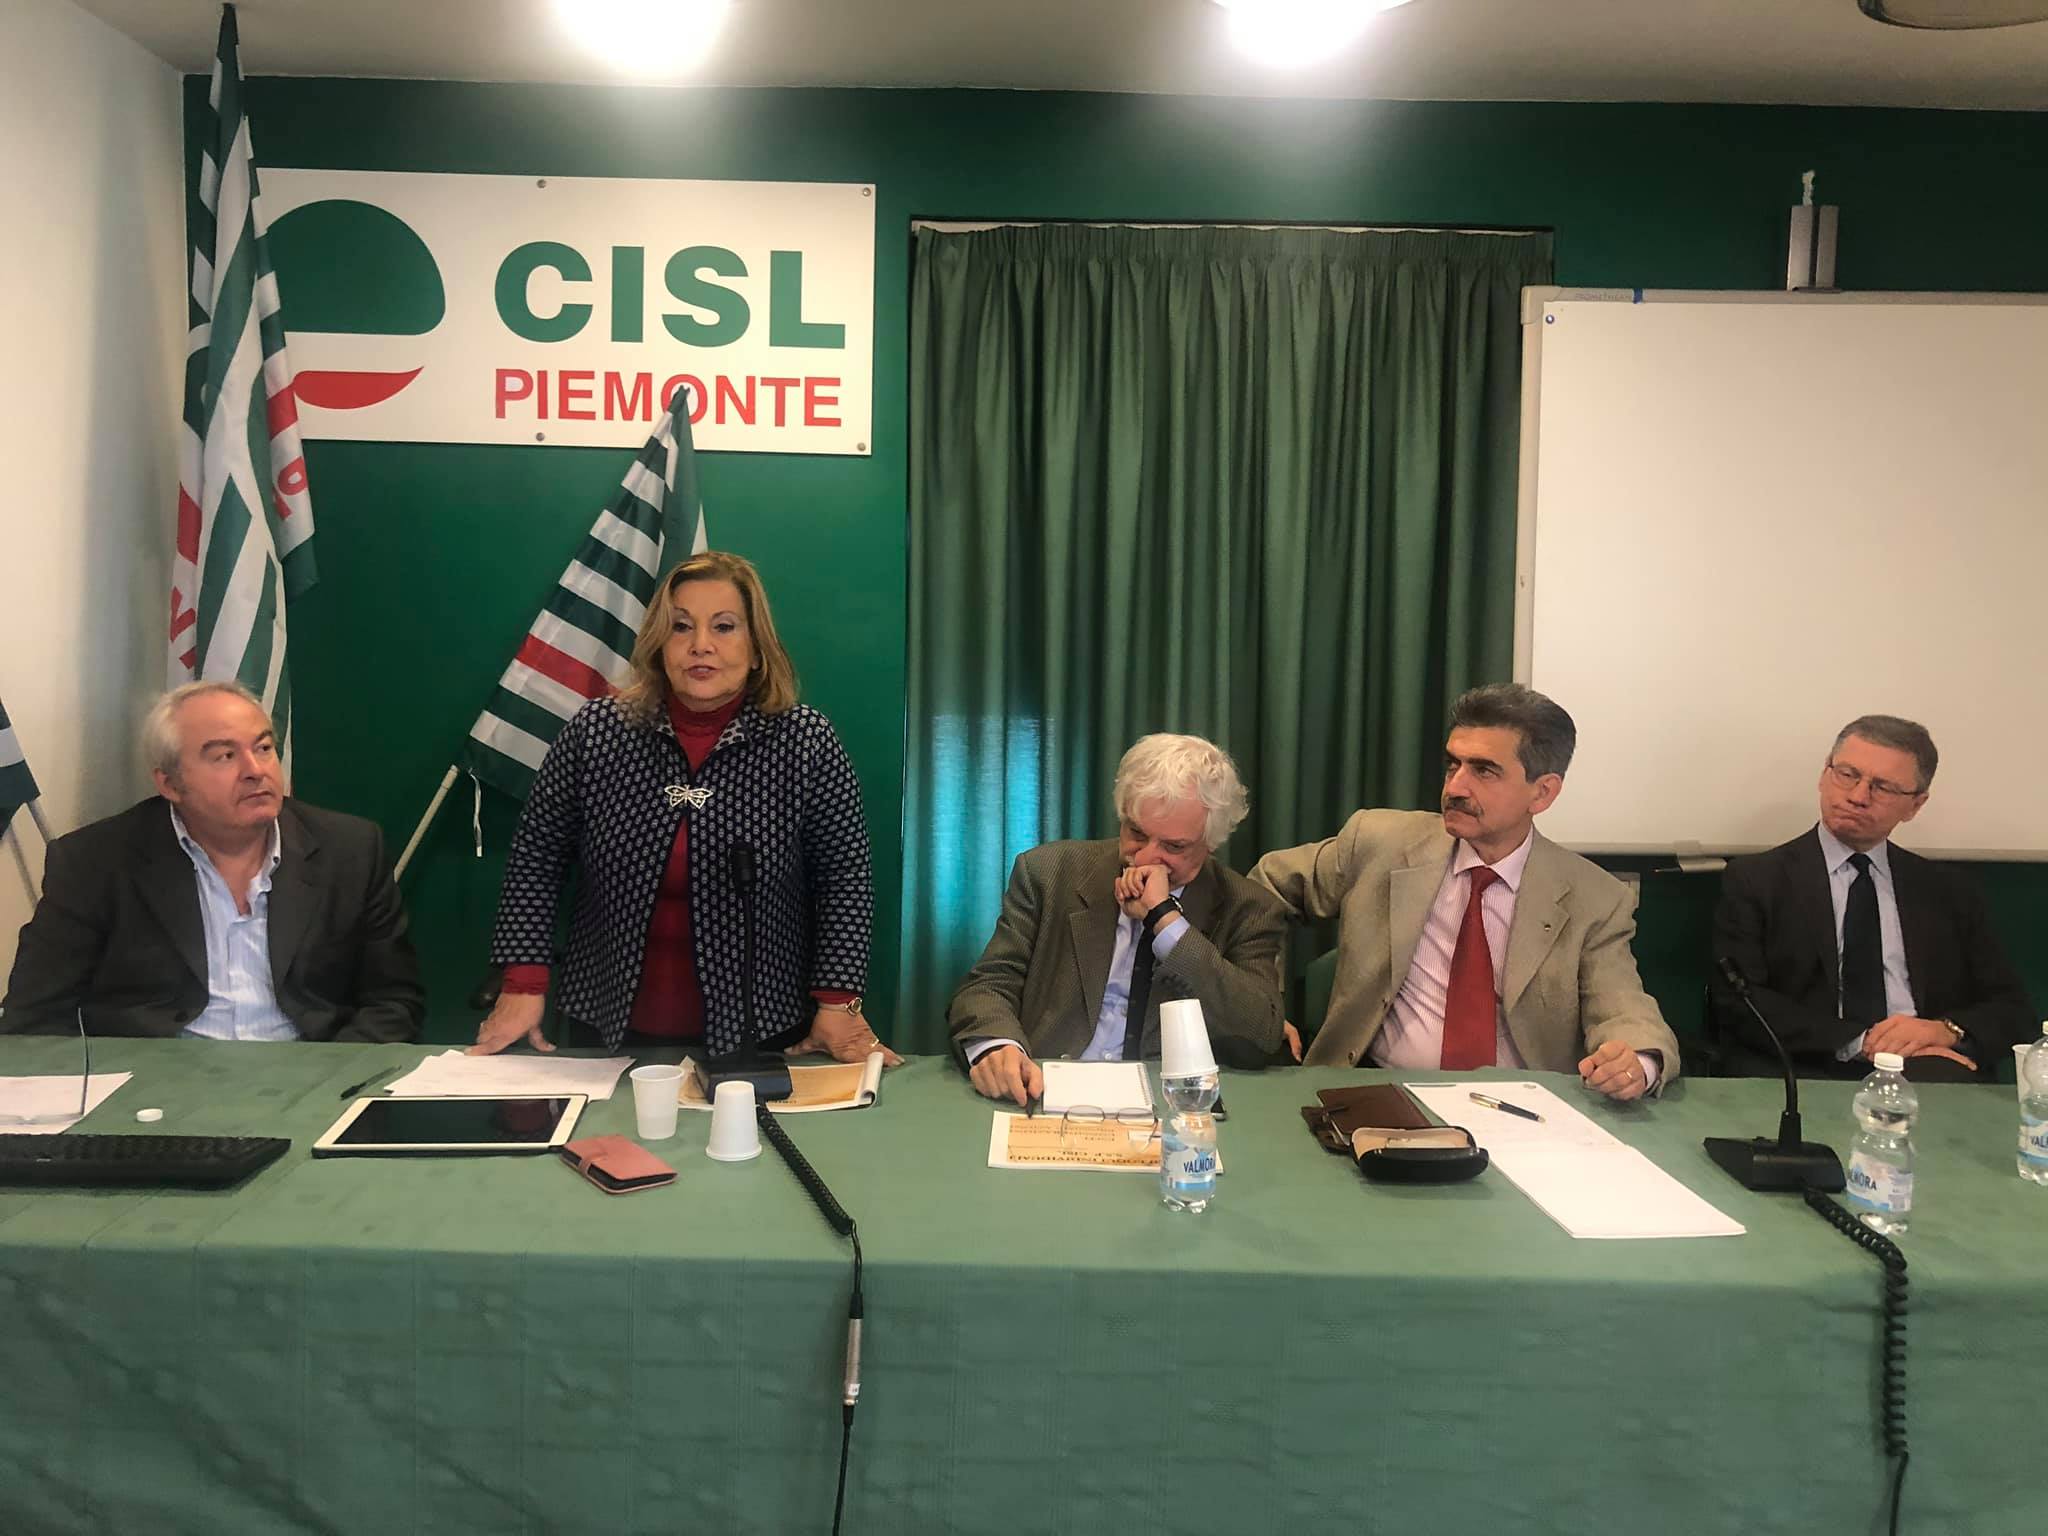 Caf Cisl riunione a Torino